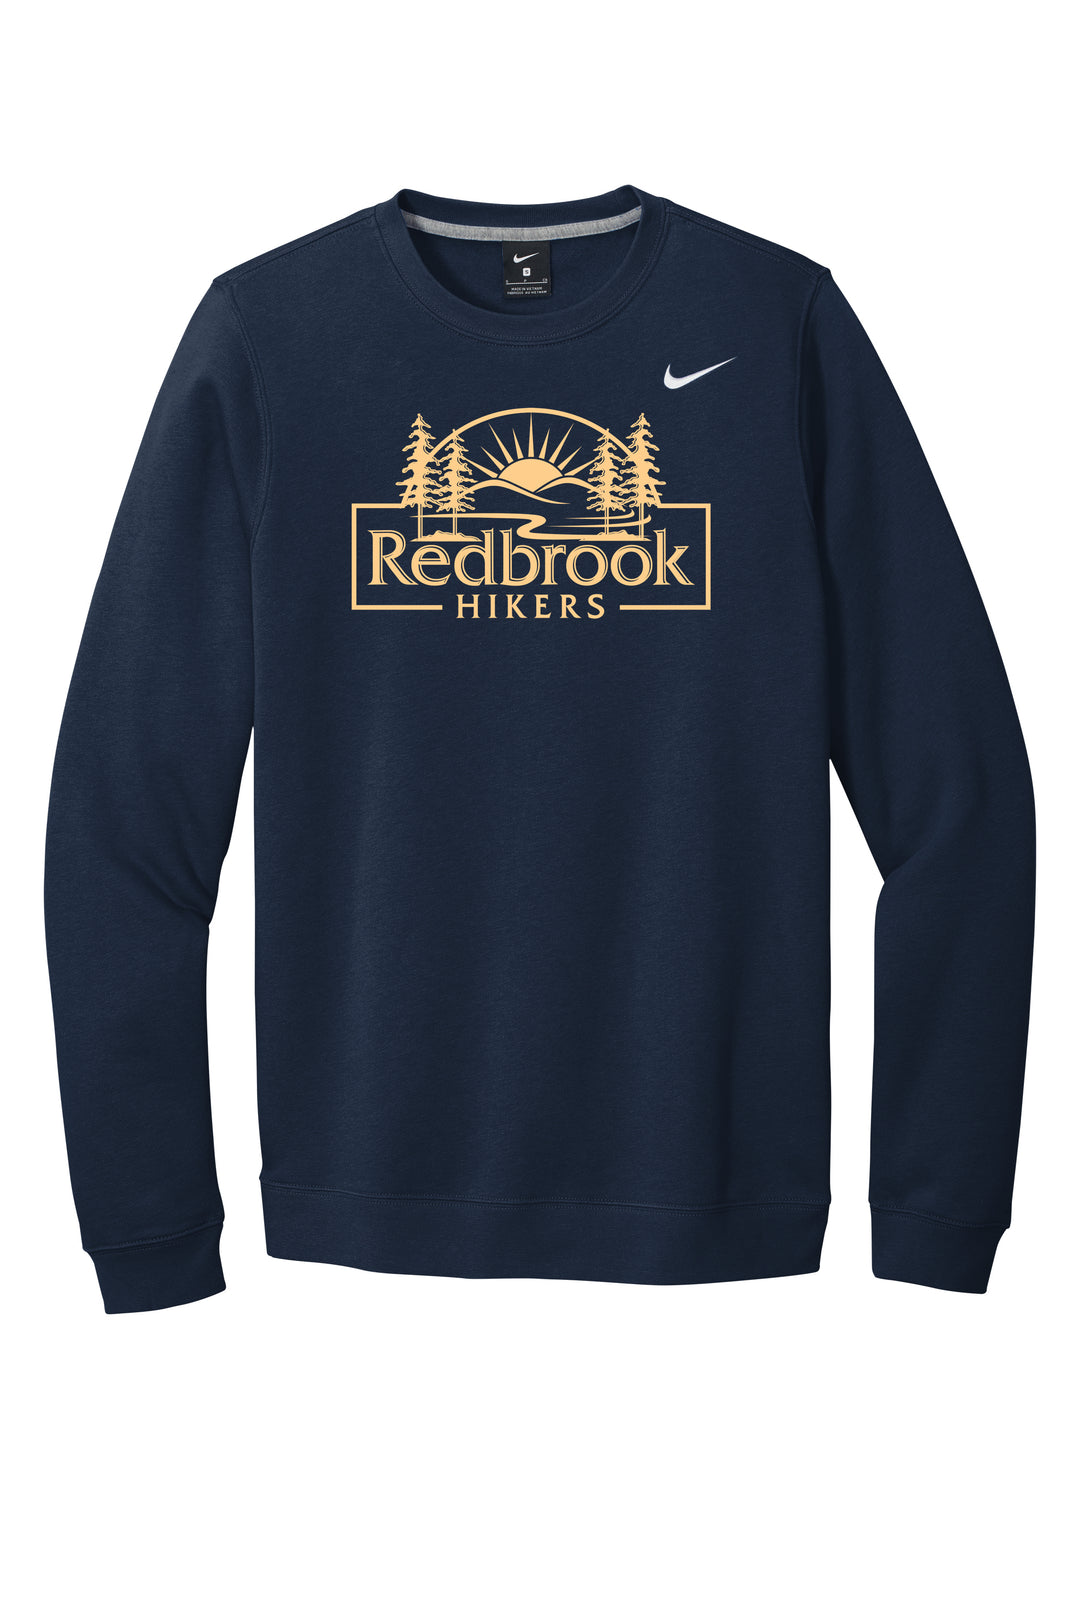 Redbrook Hikers- Nike Club Fleece Crew (CJ1614)